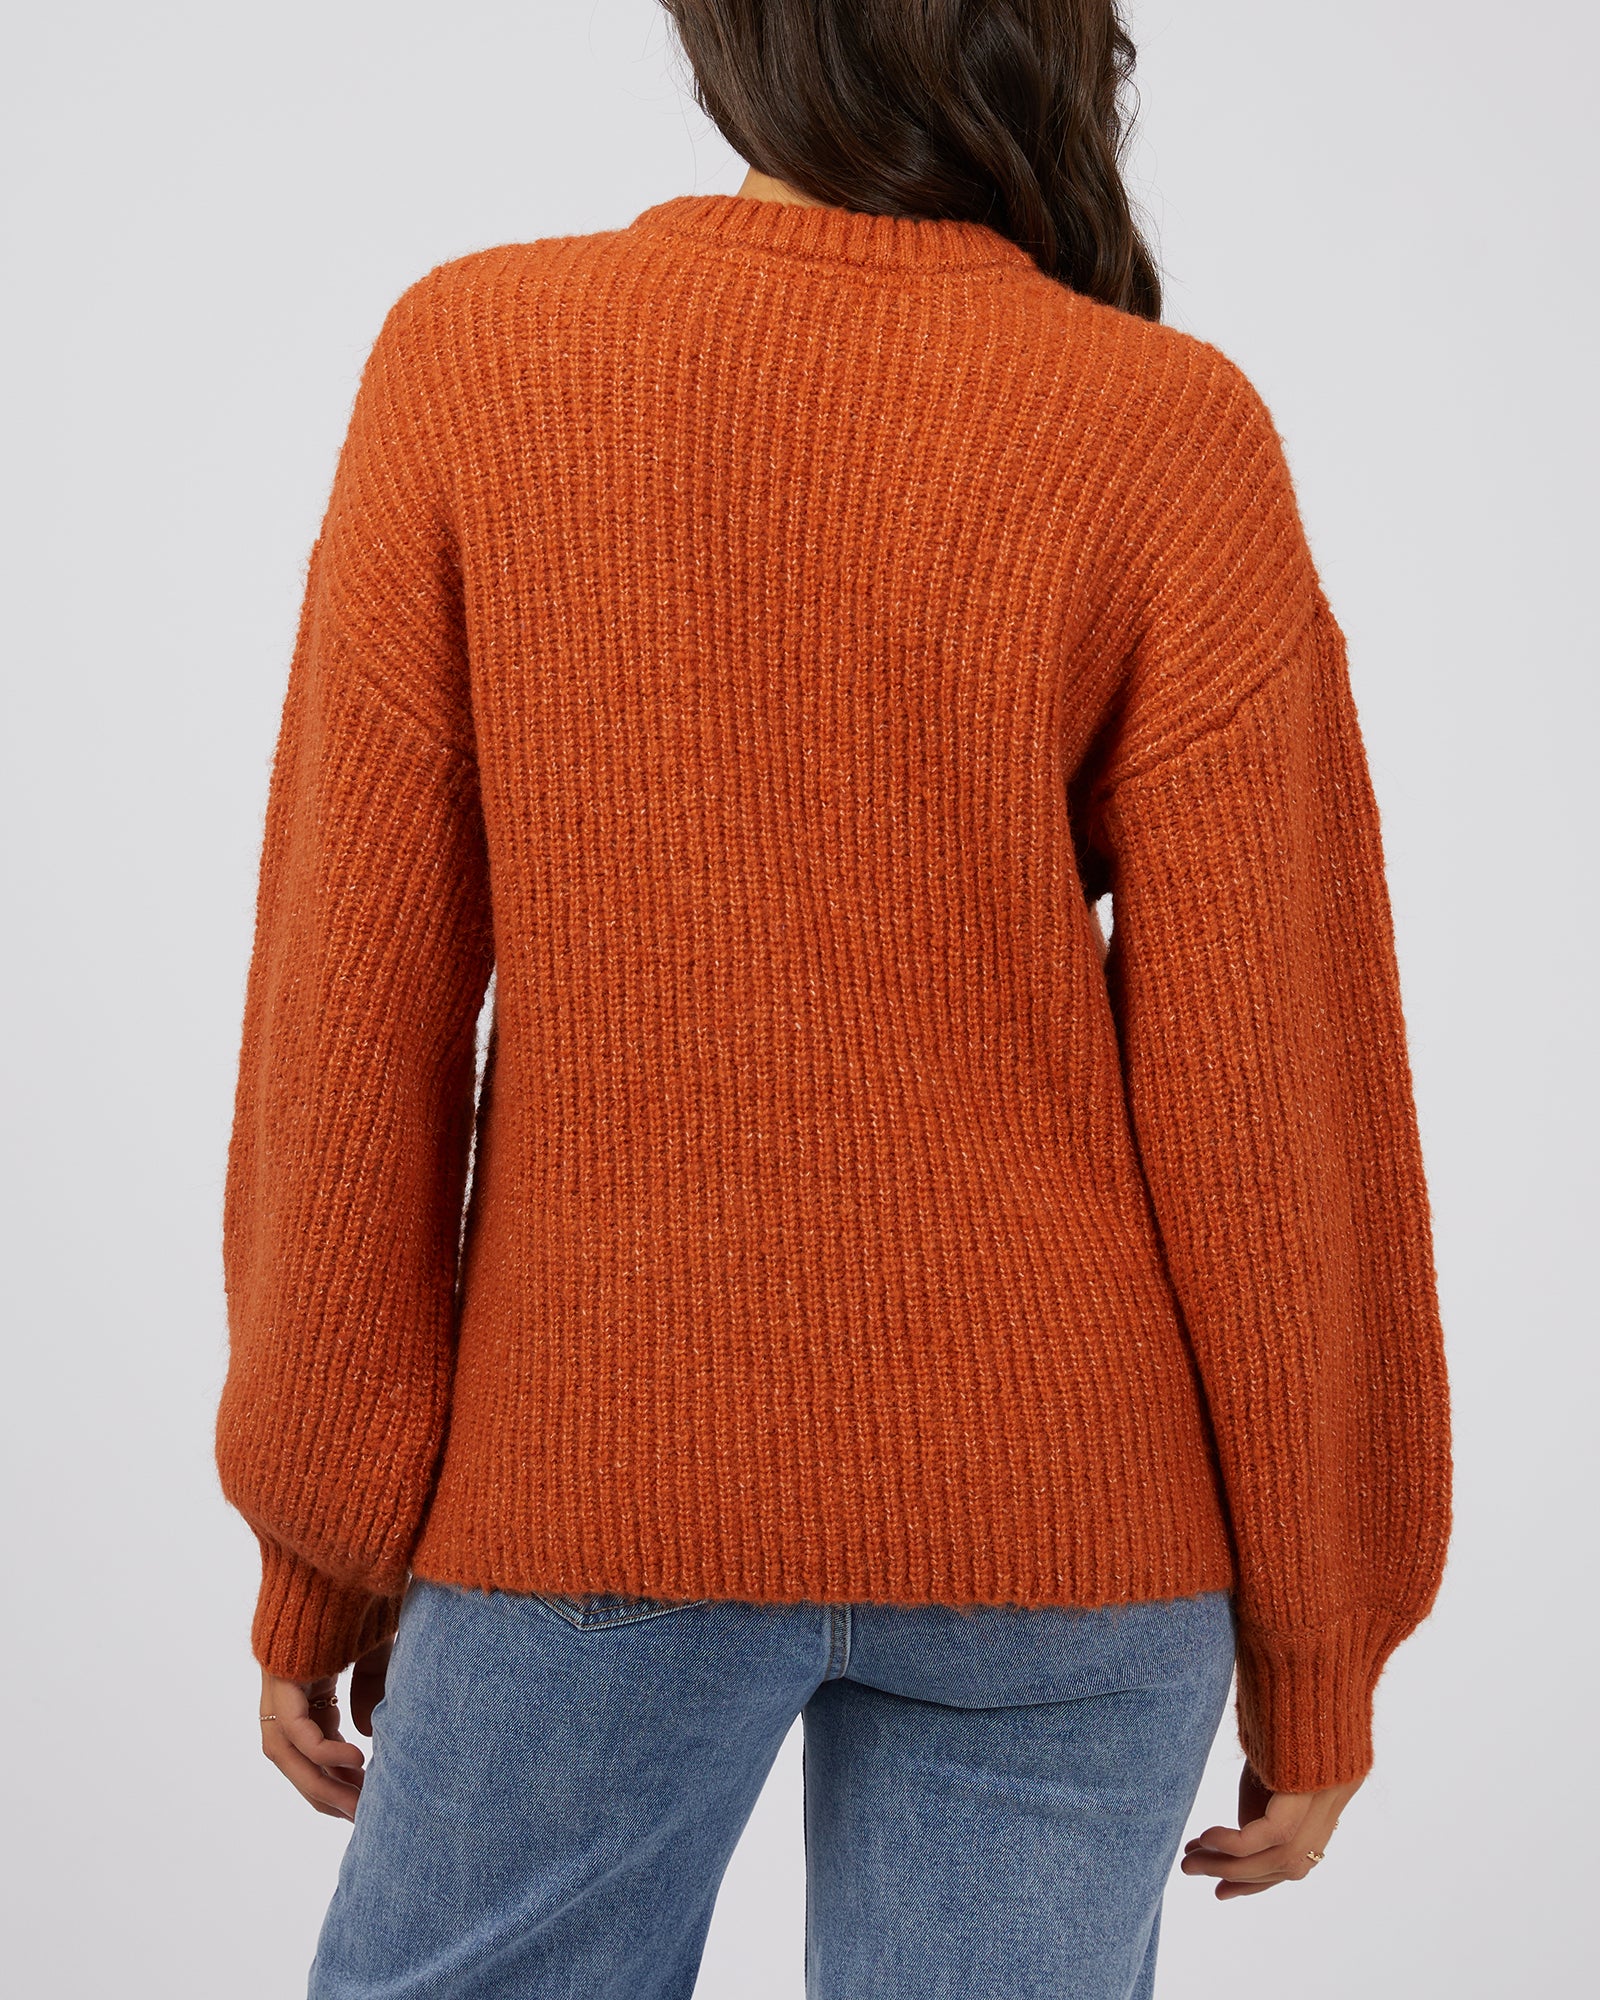 Tessa knit Orange